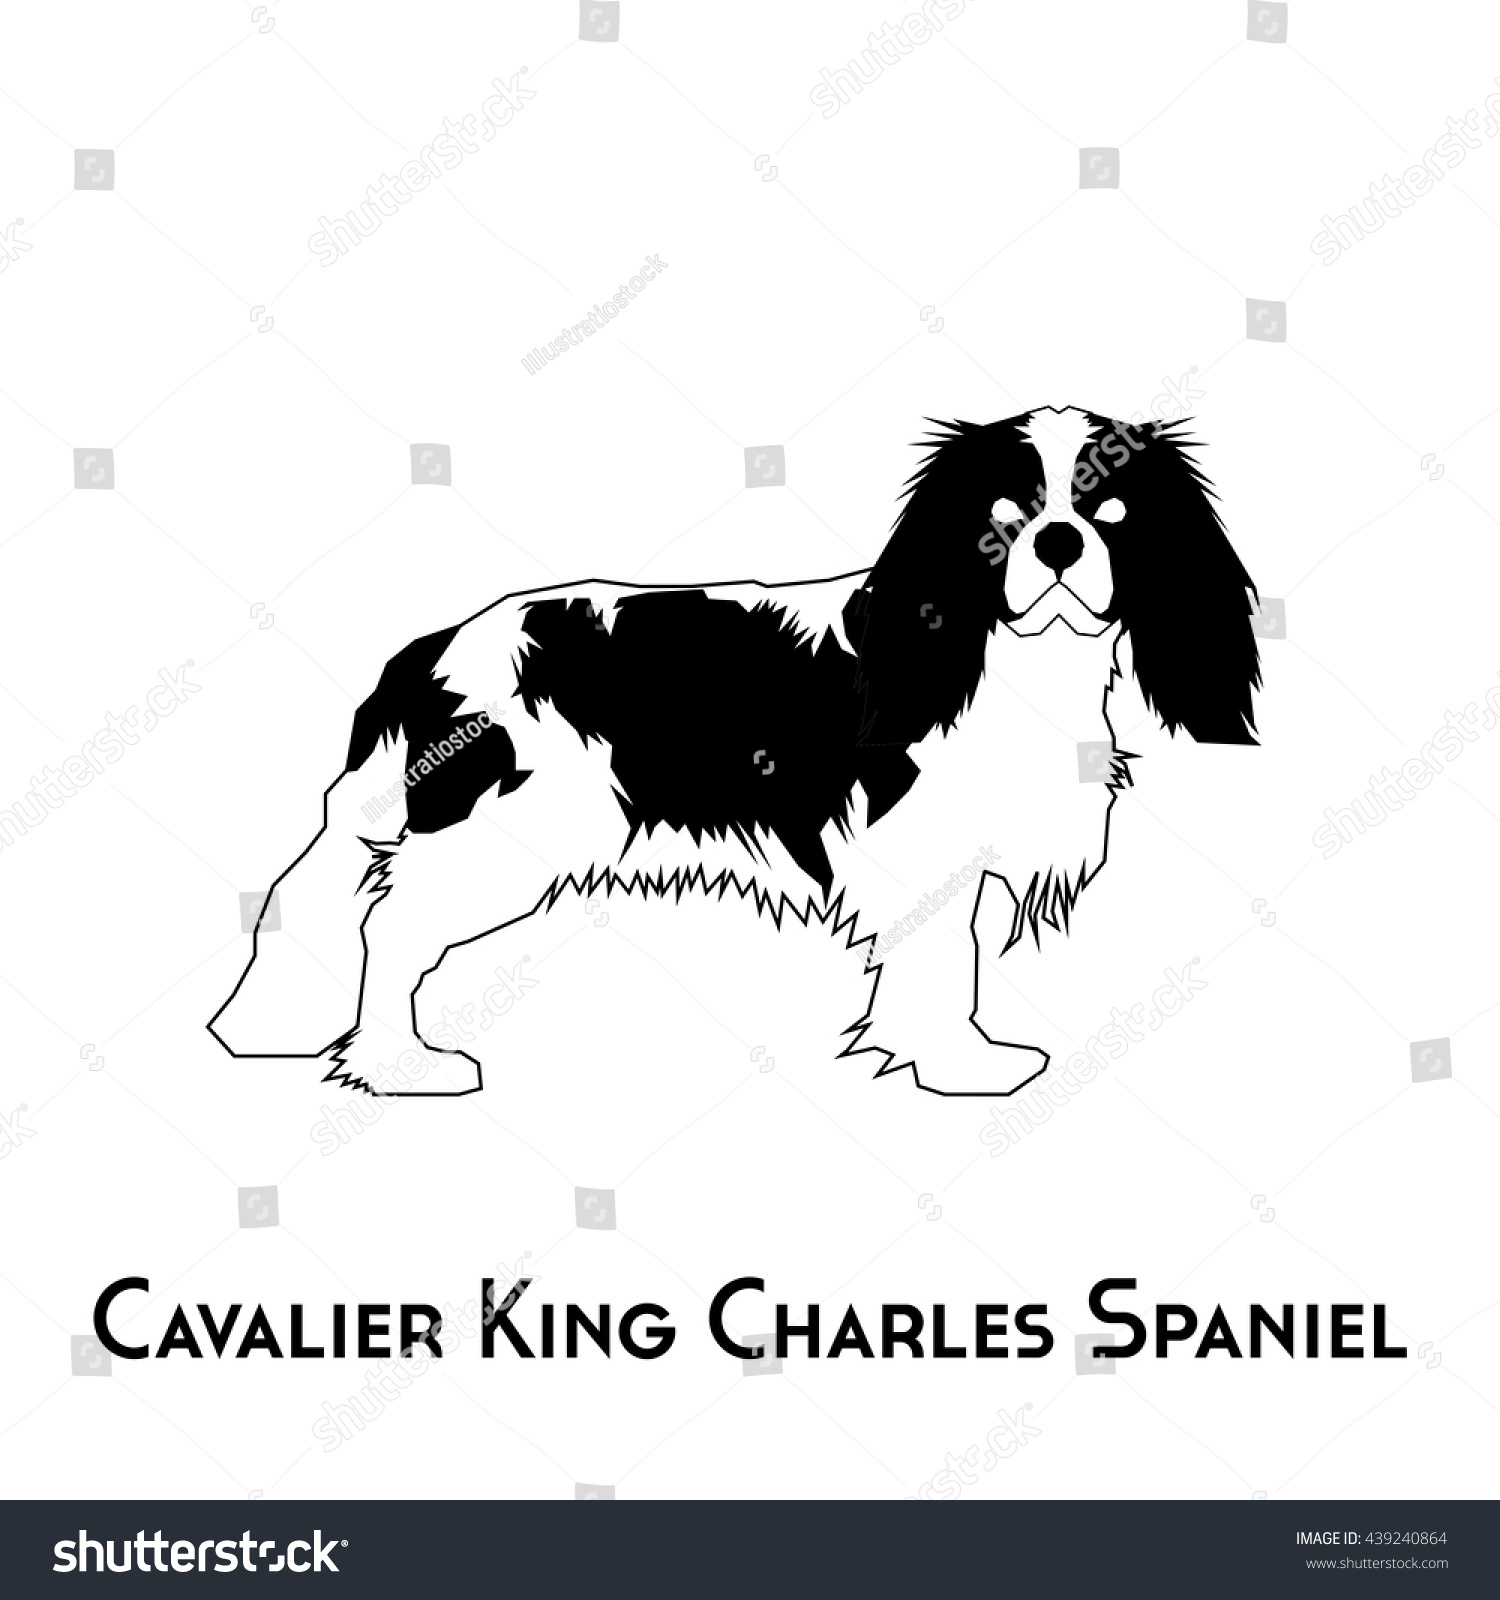 cavalier king charles spaniel clipart - photo #13